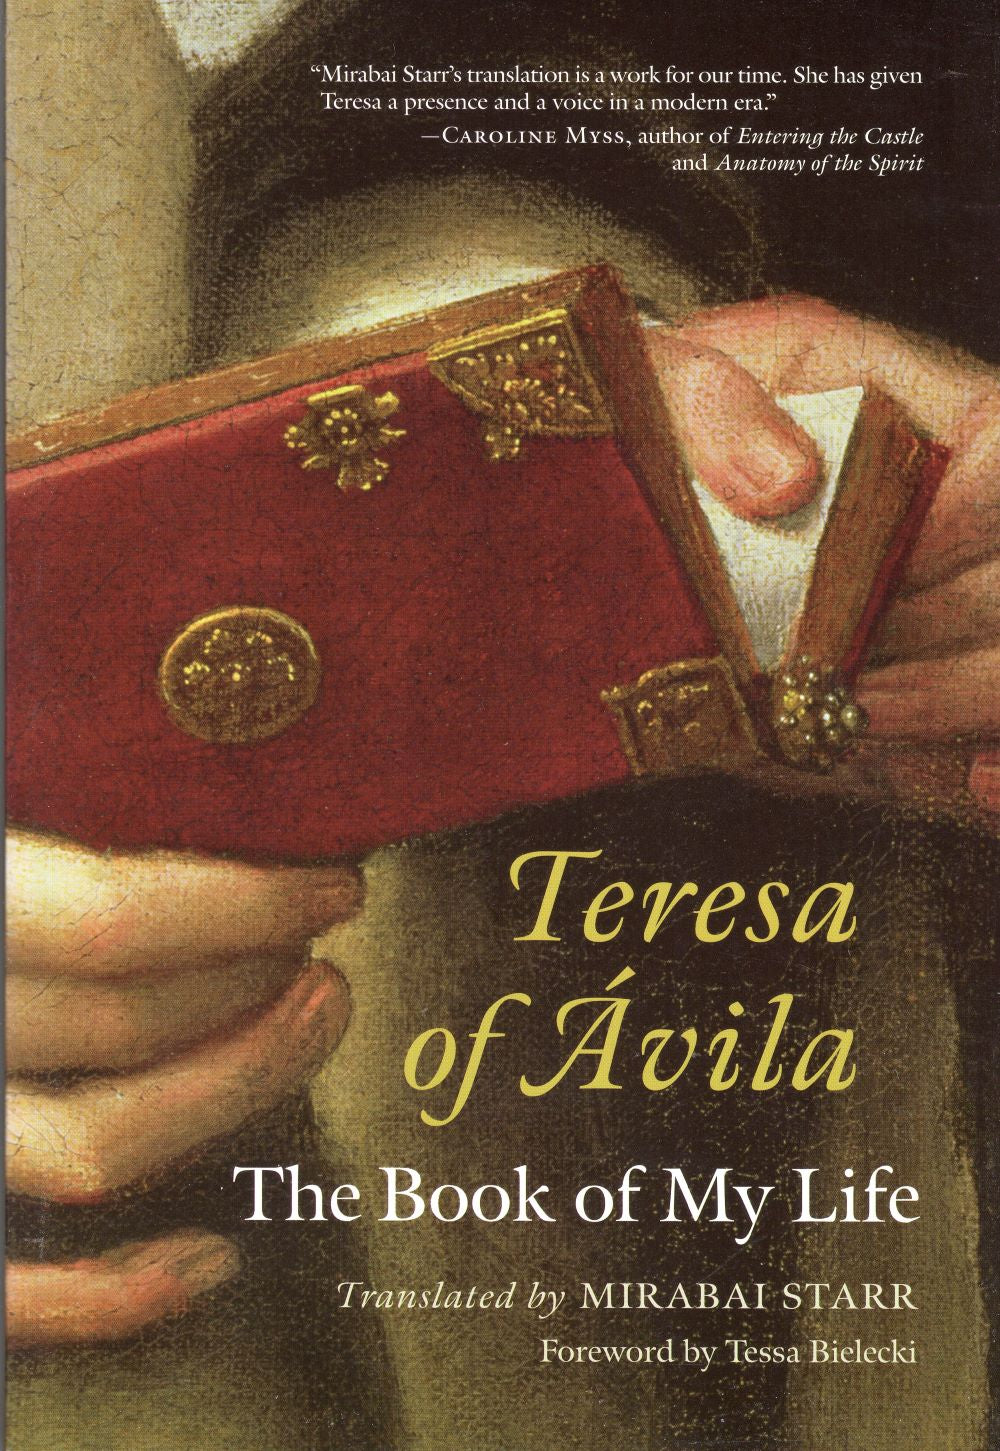 TERESA OF AVILA: The Book of My Life (2007)